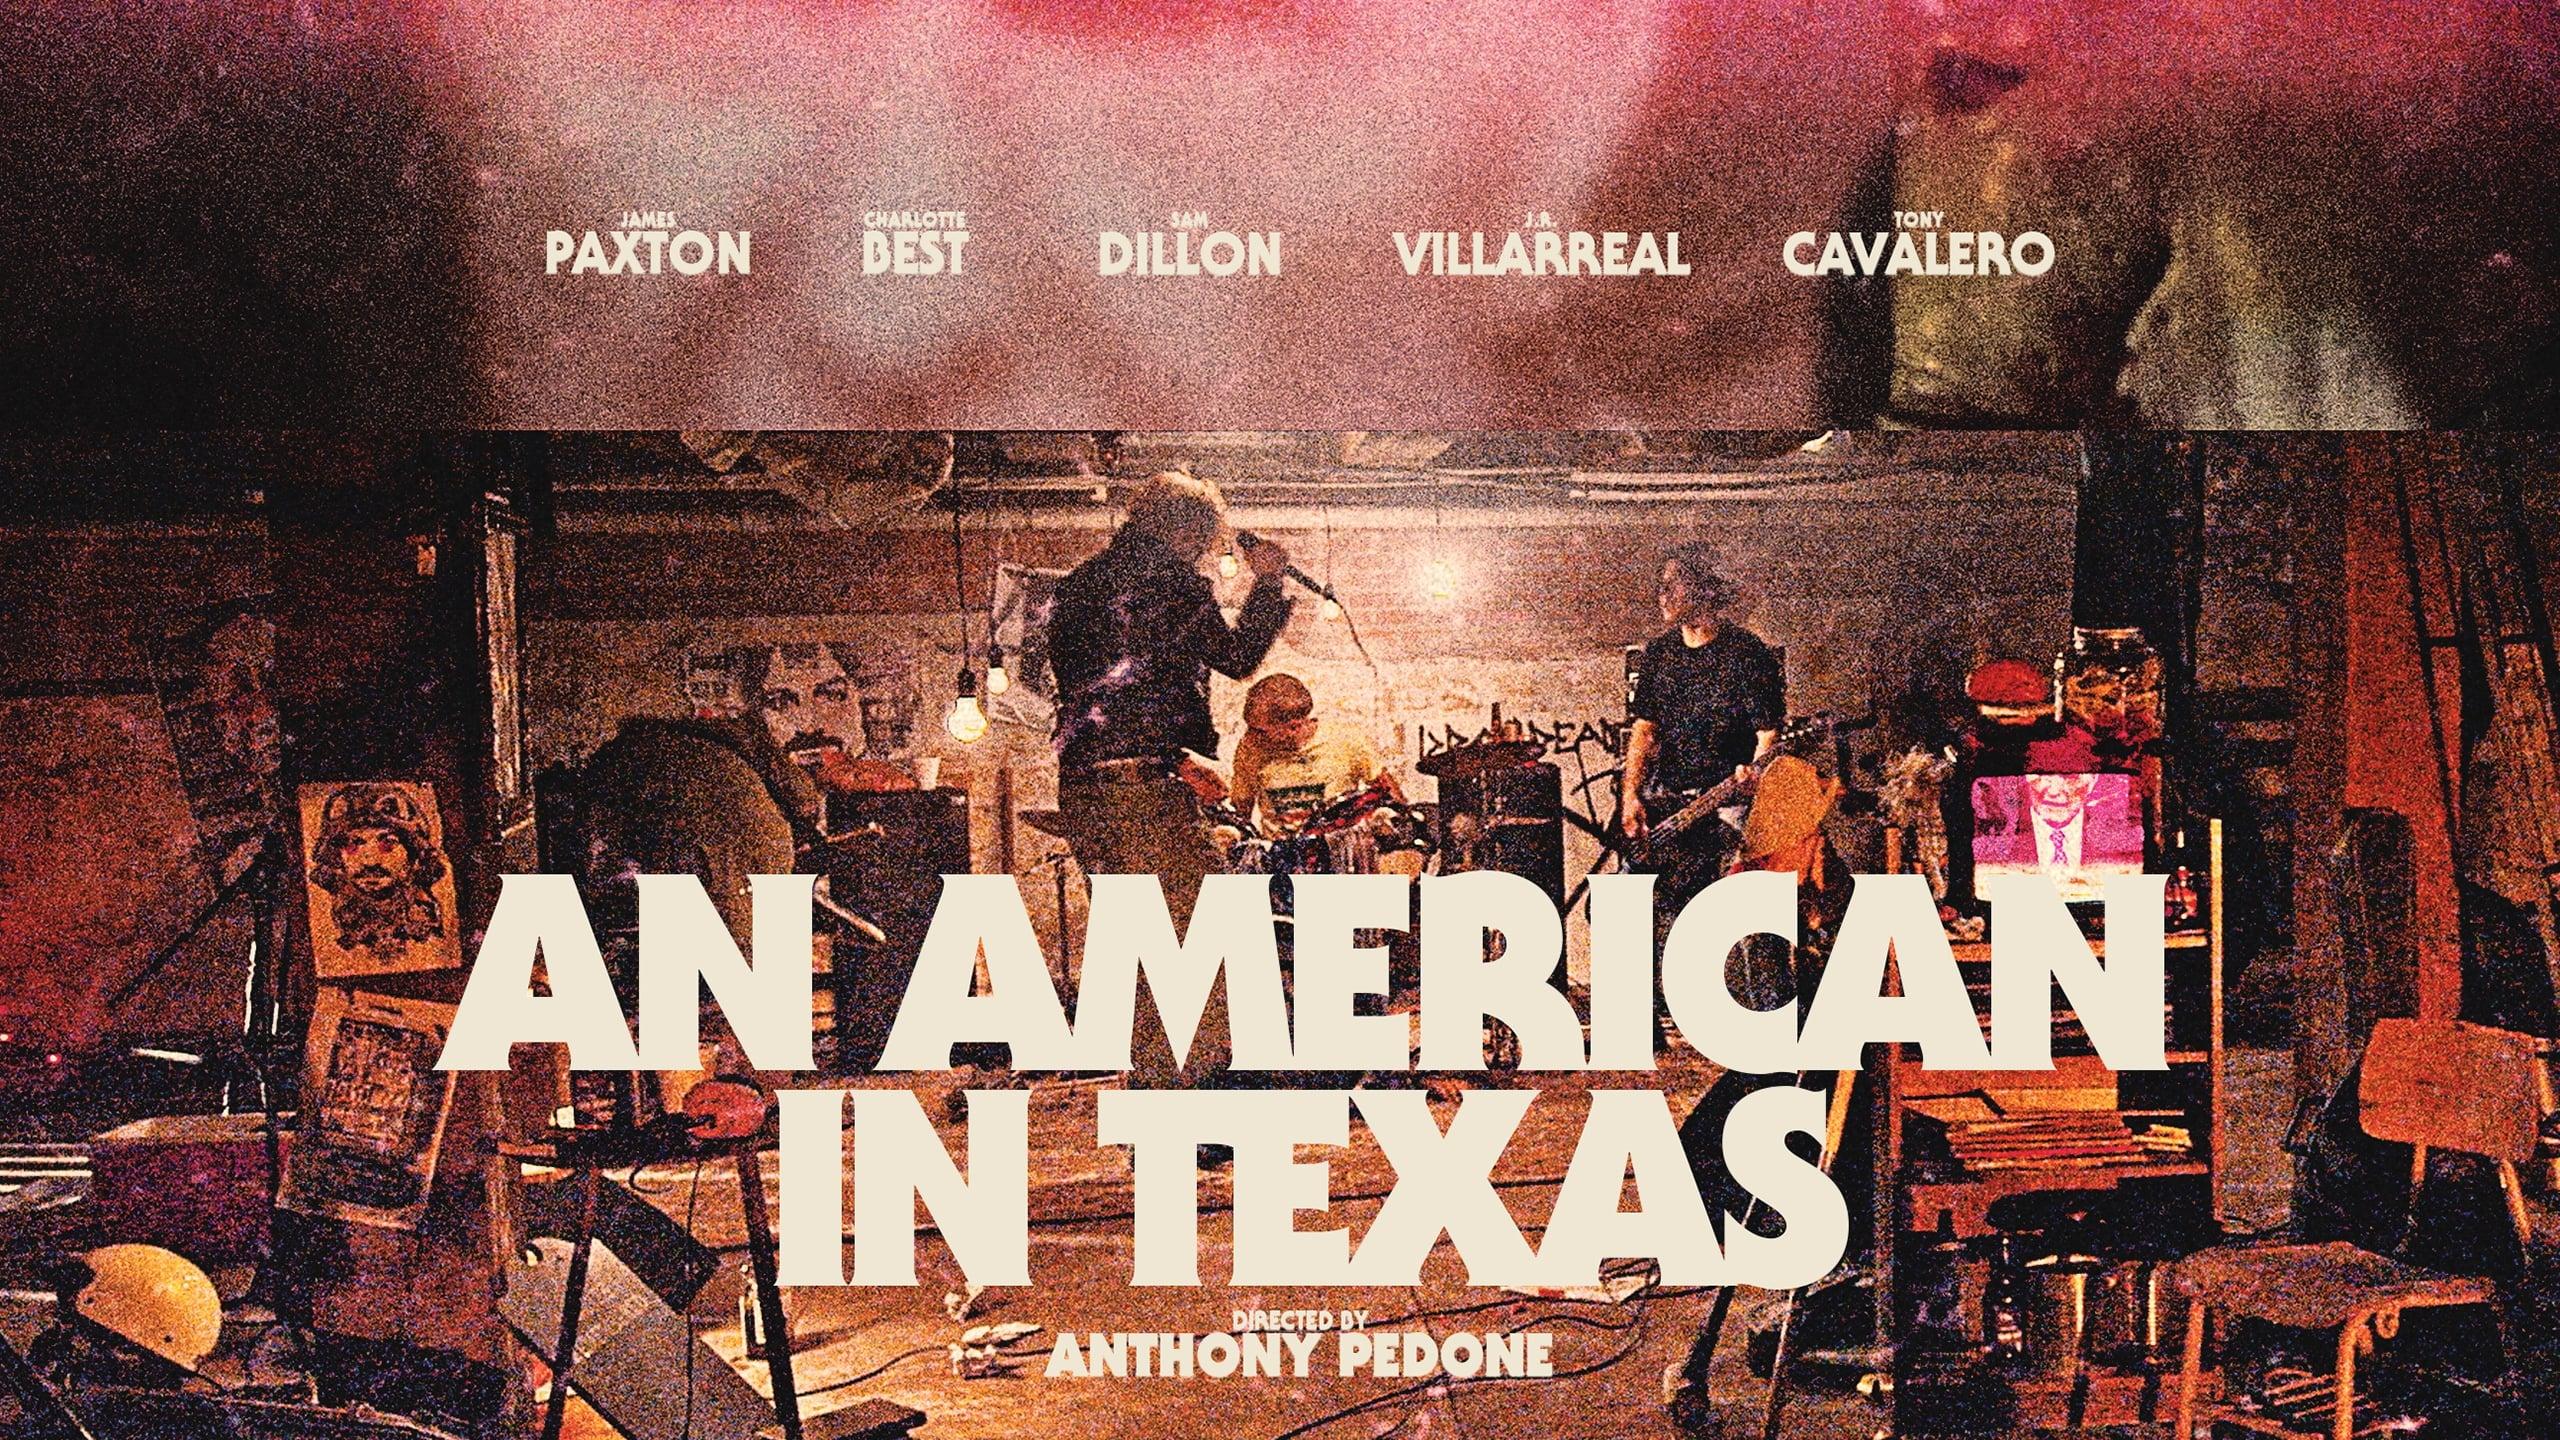 An American in Texas backdrop